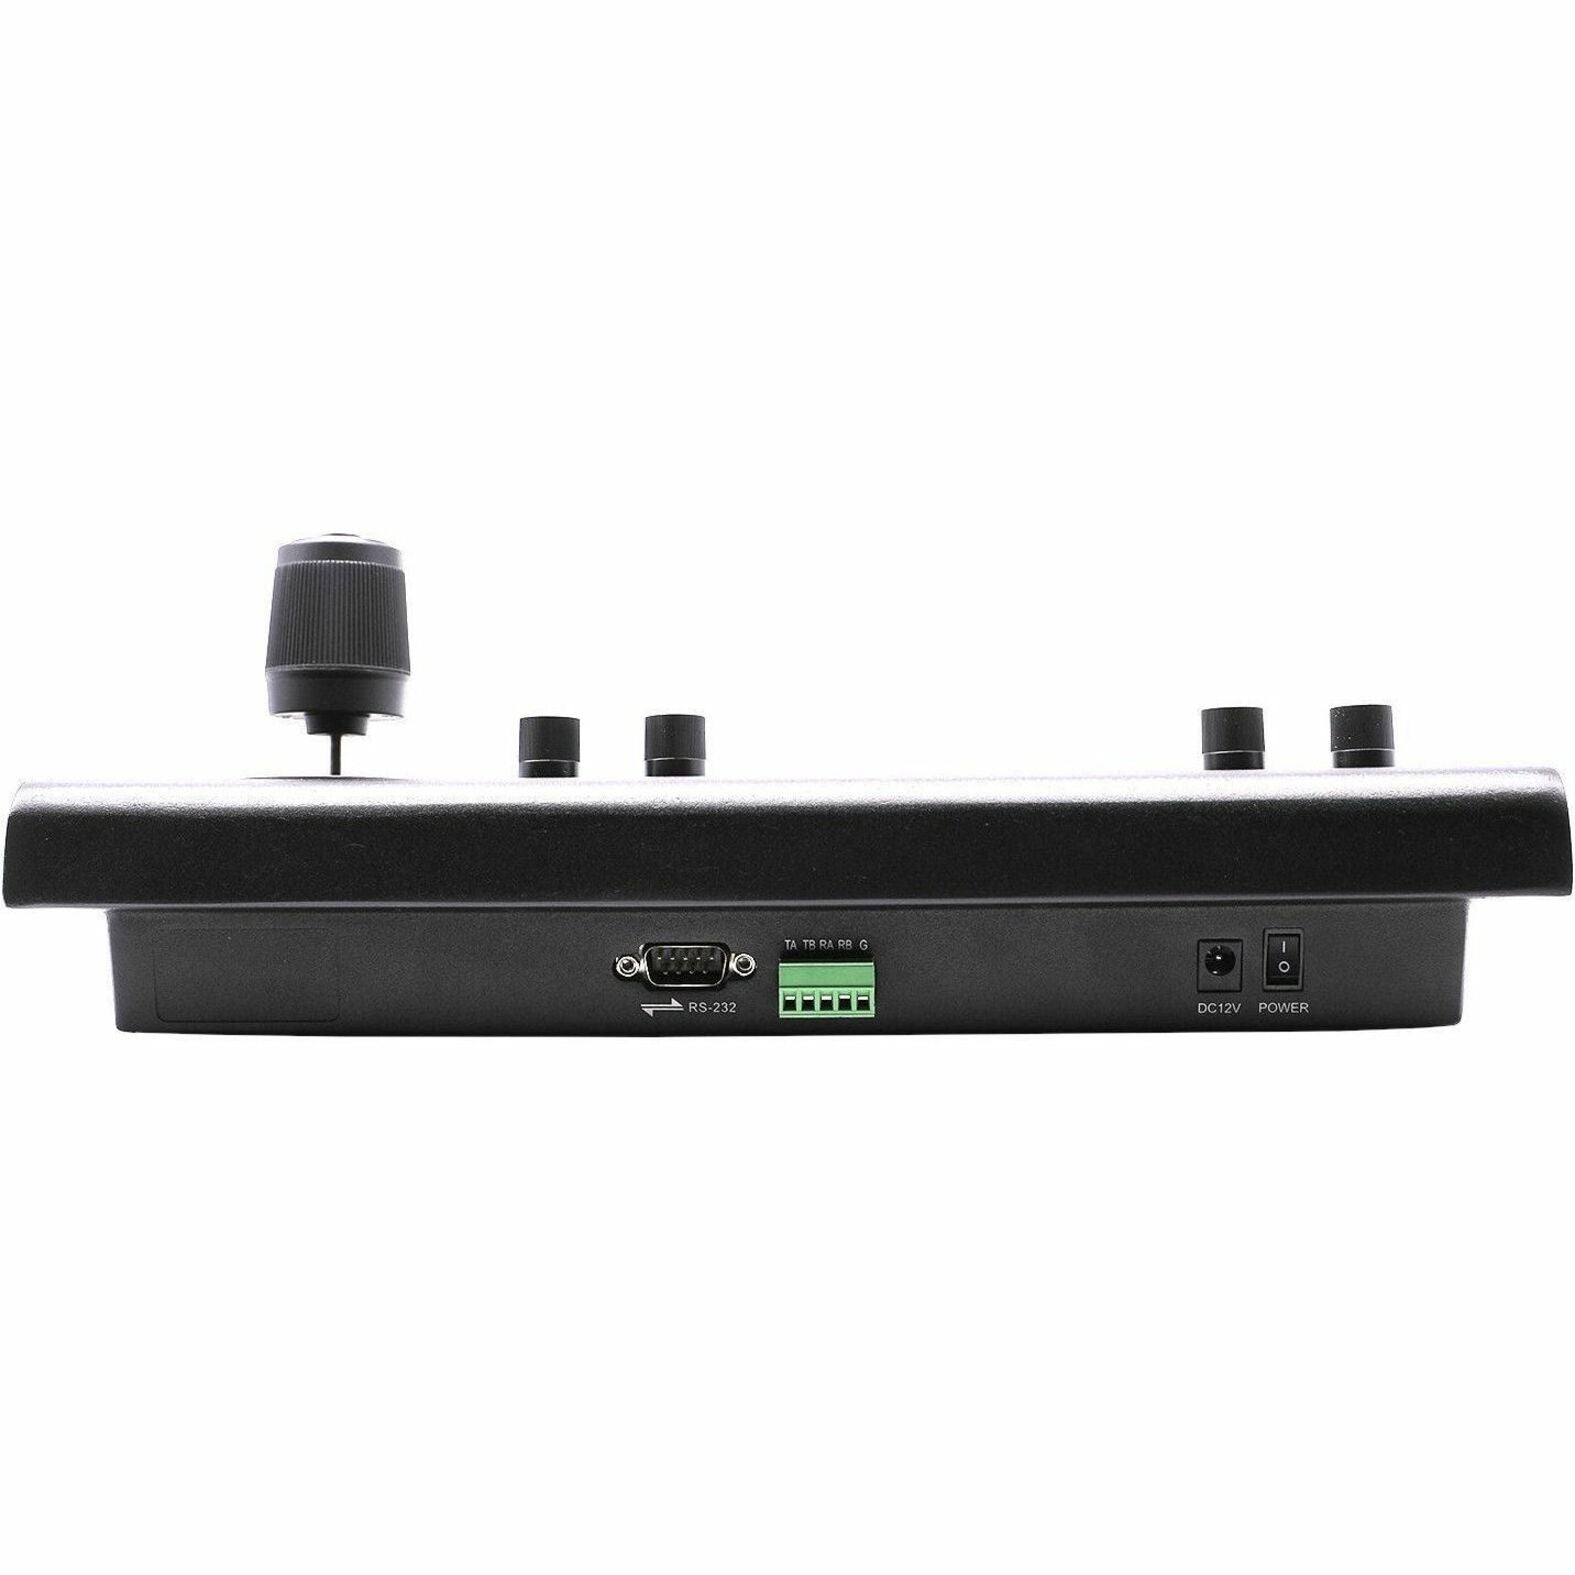 HuddleCamHD HC-JOY-G4 Serial Joystick Controller, Surveillance Control Panel for PTZ Cameras